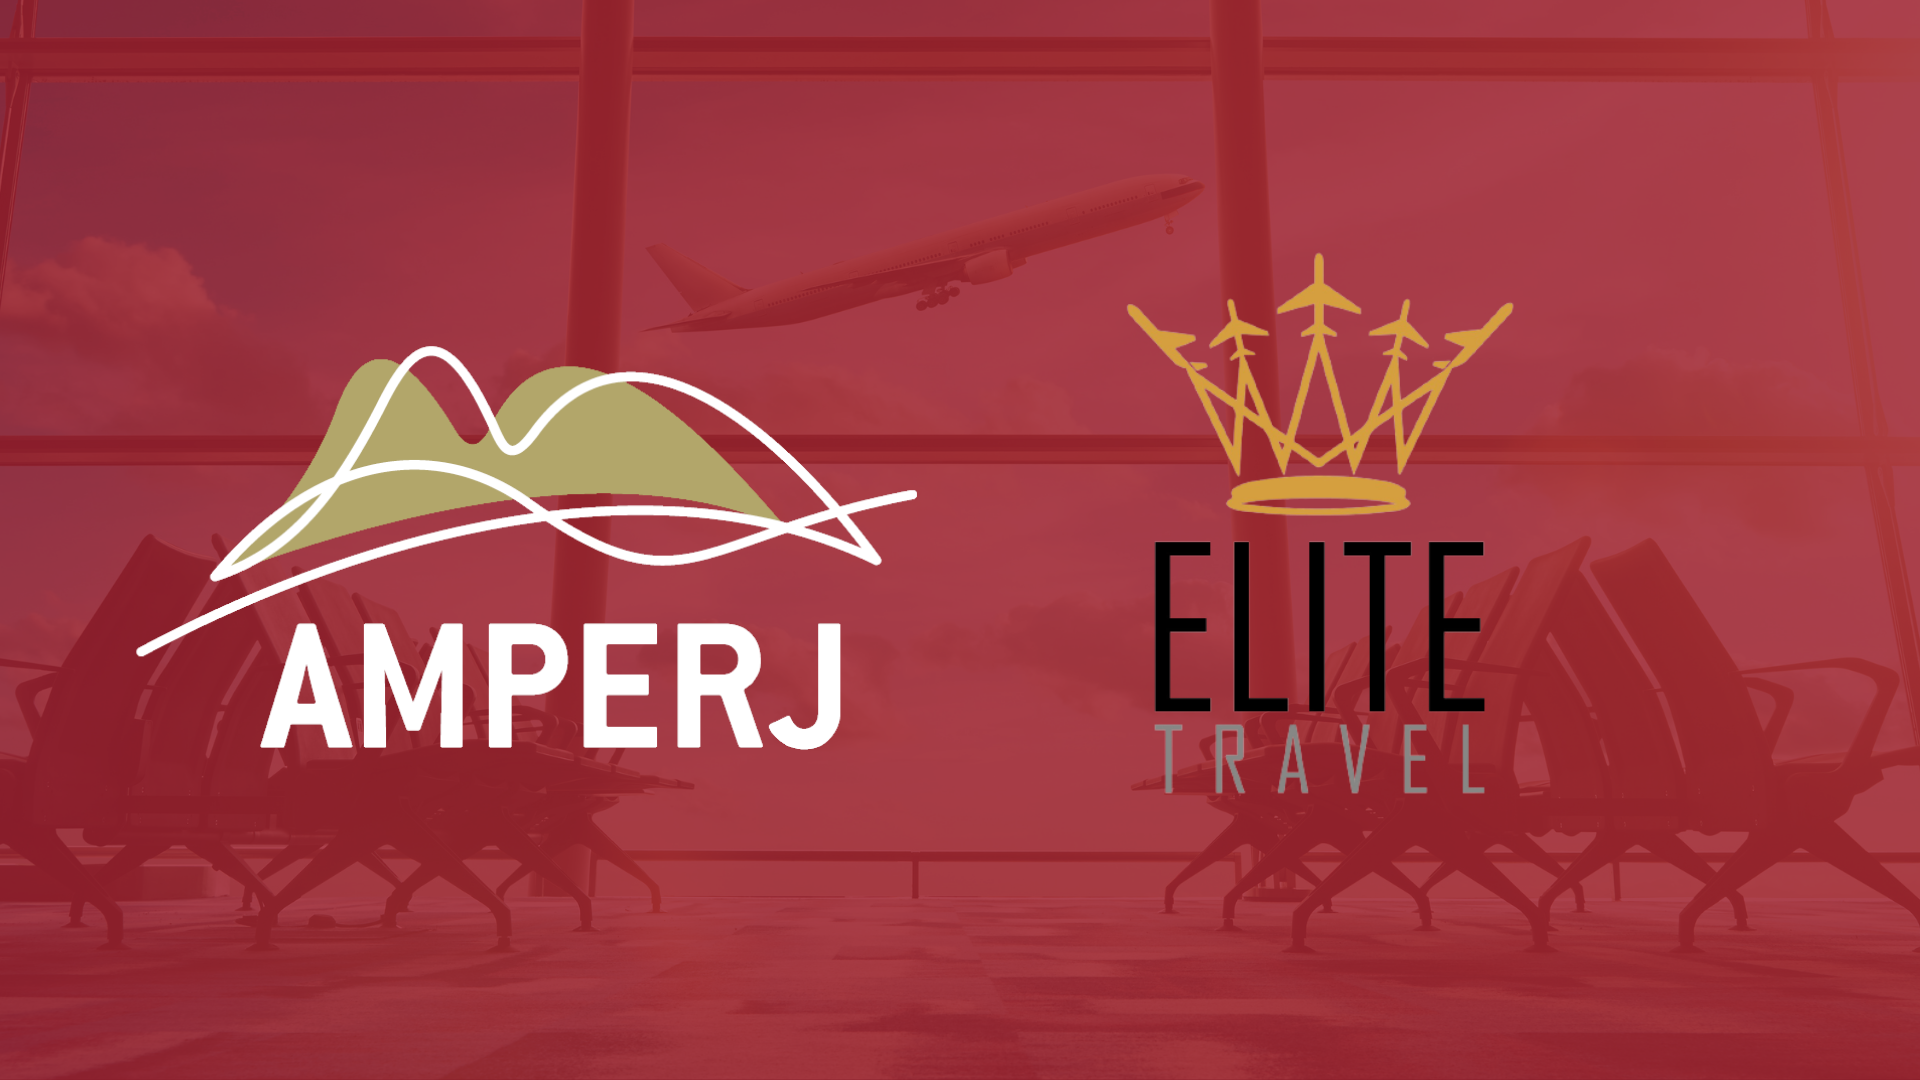 elite travel elite